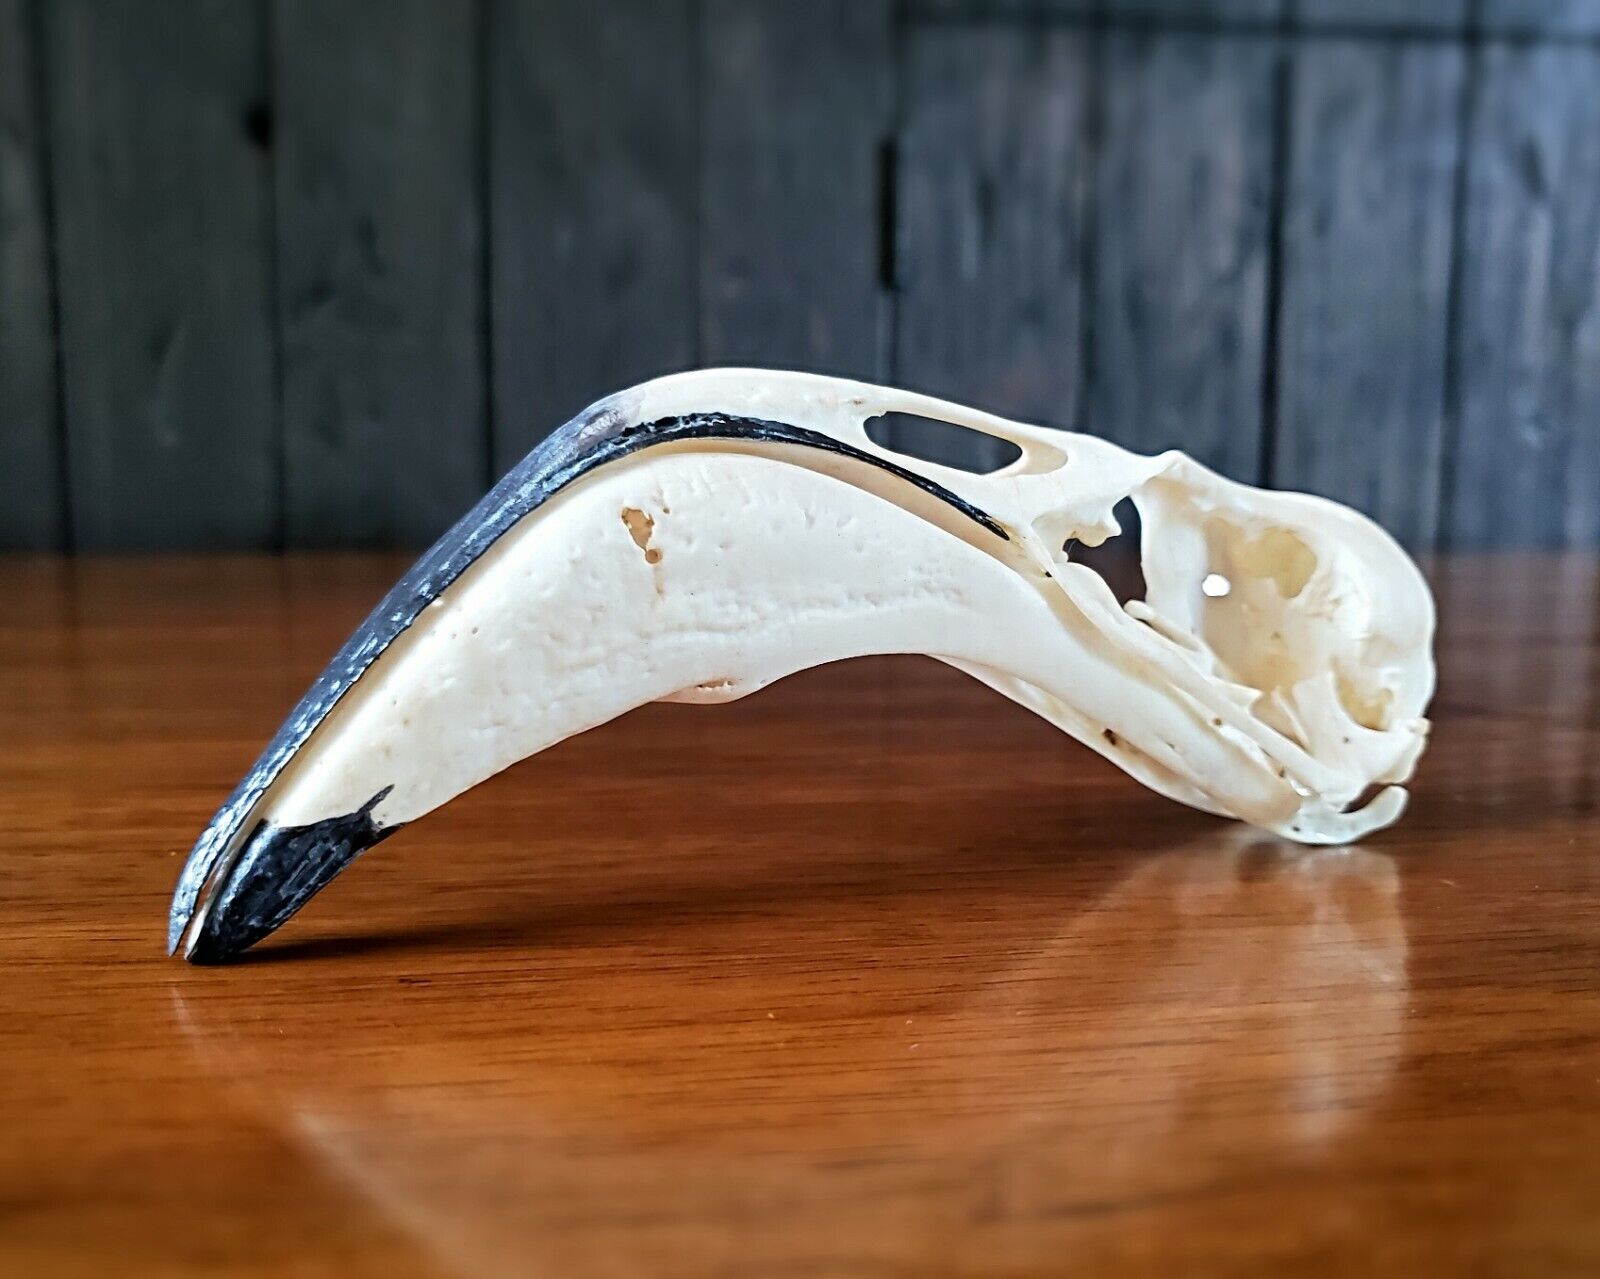 Replica Flamingo Skull, Greater Flamingo Skull, Oddities, Curiosities, Birds